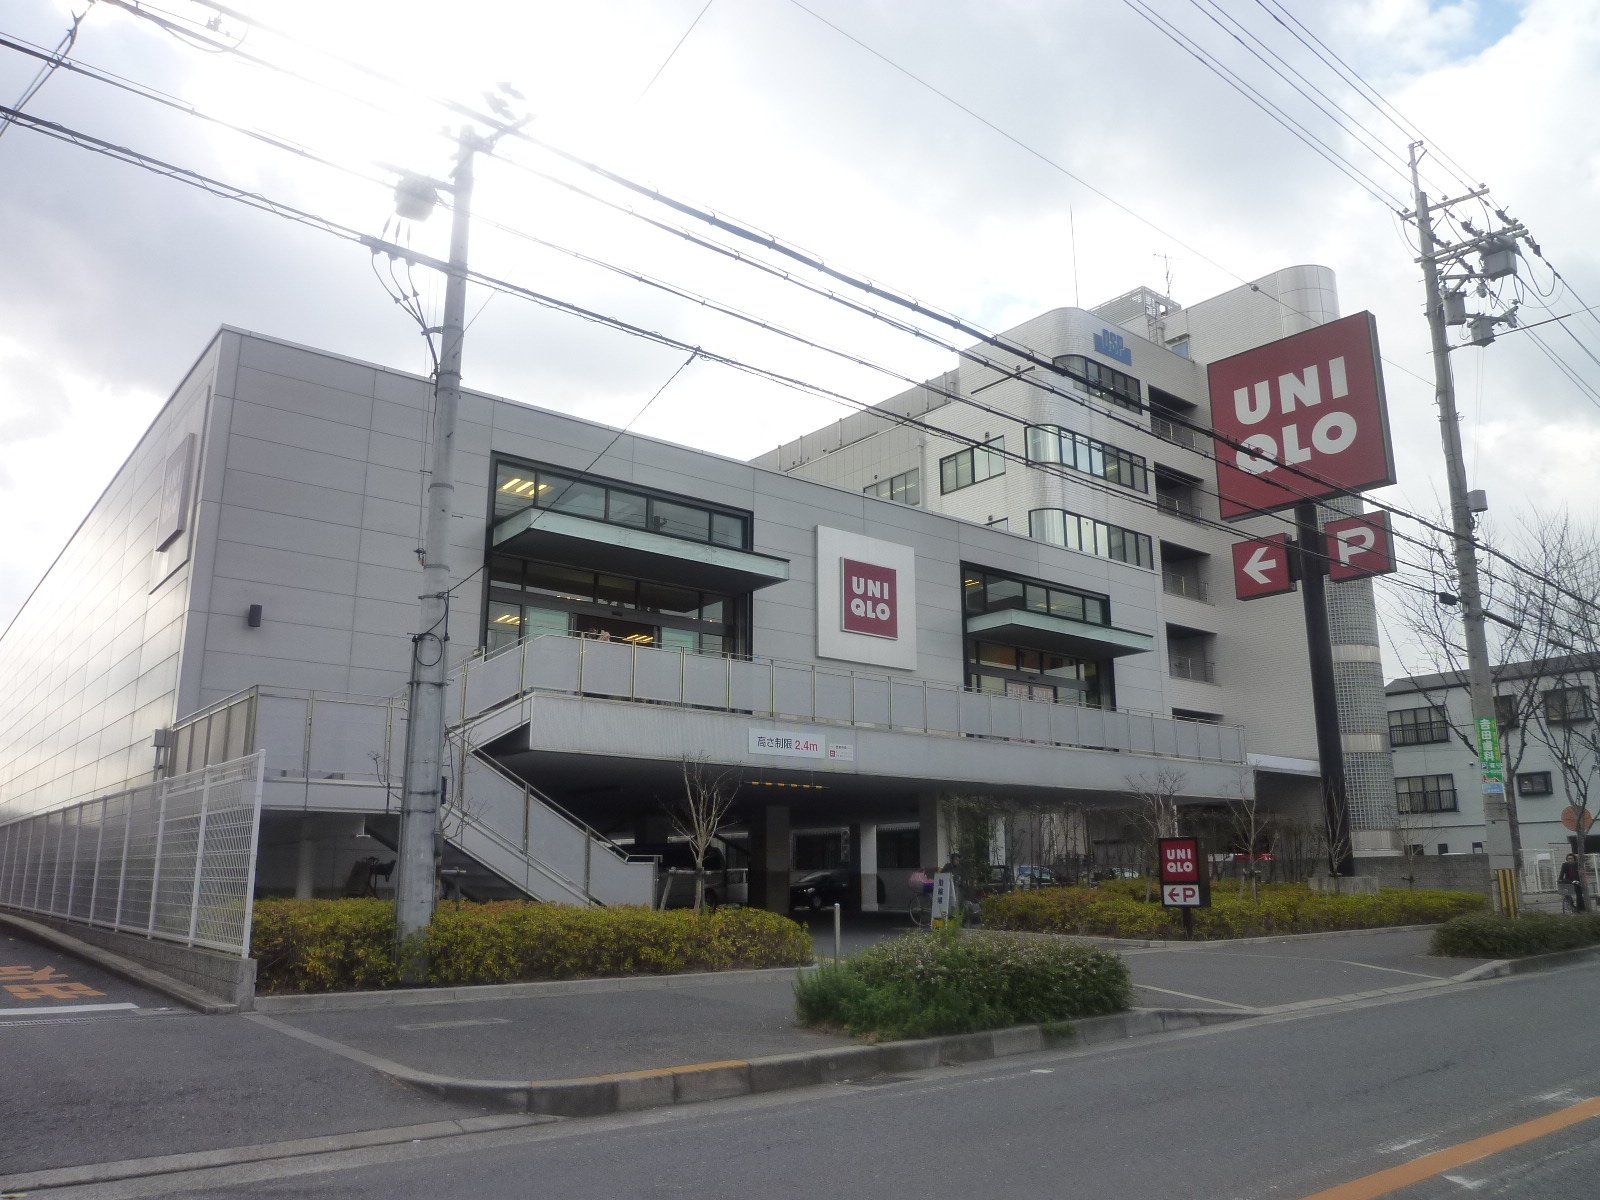 Shopping centre. 1169m to UNIQLO Yao Aoyama (shopping center)